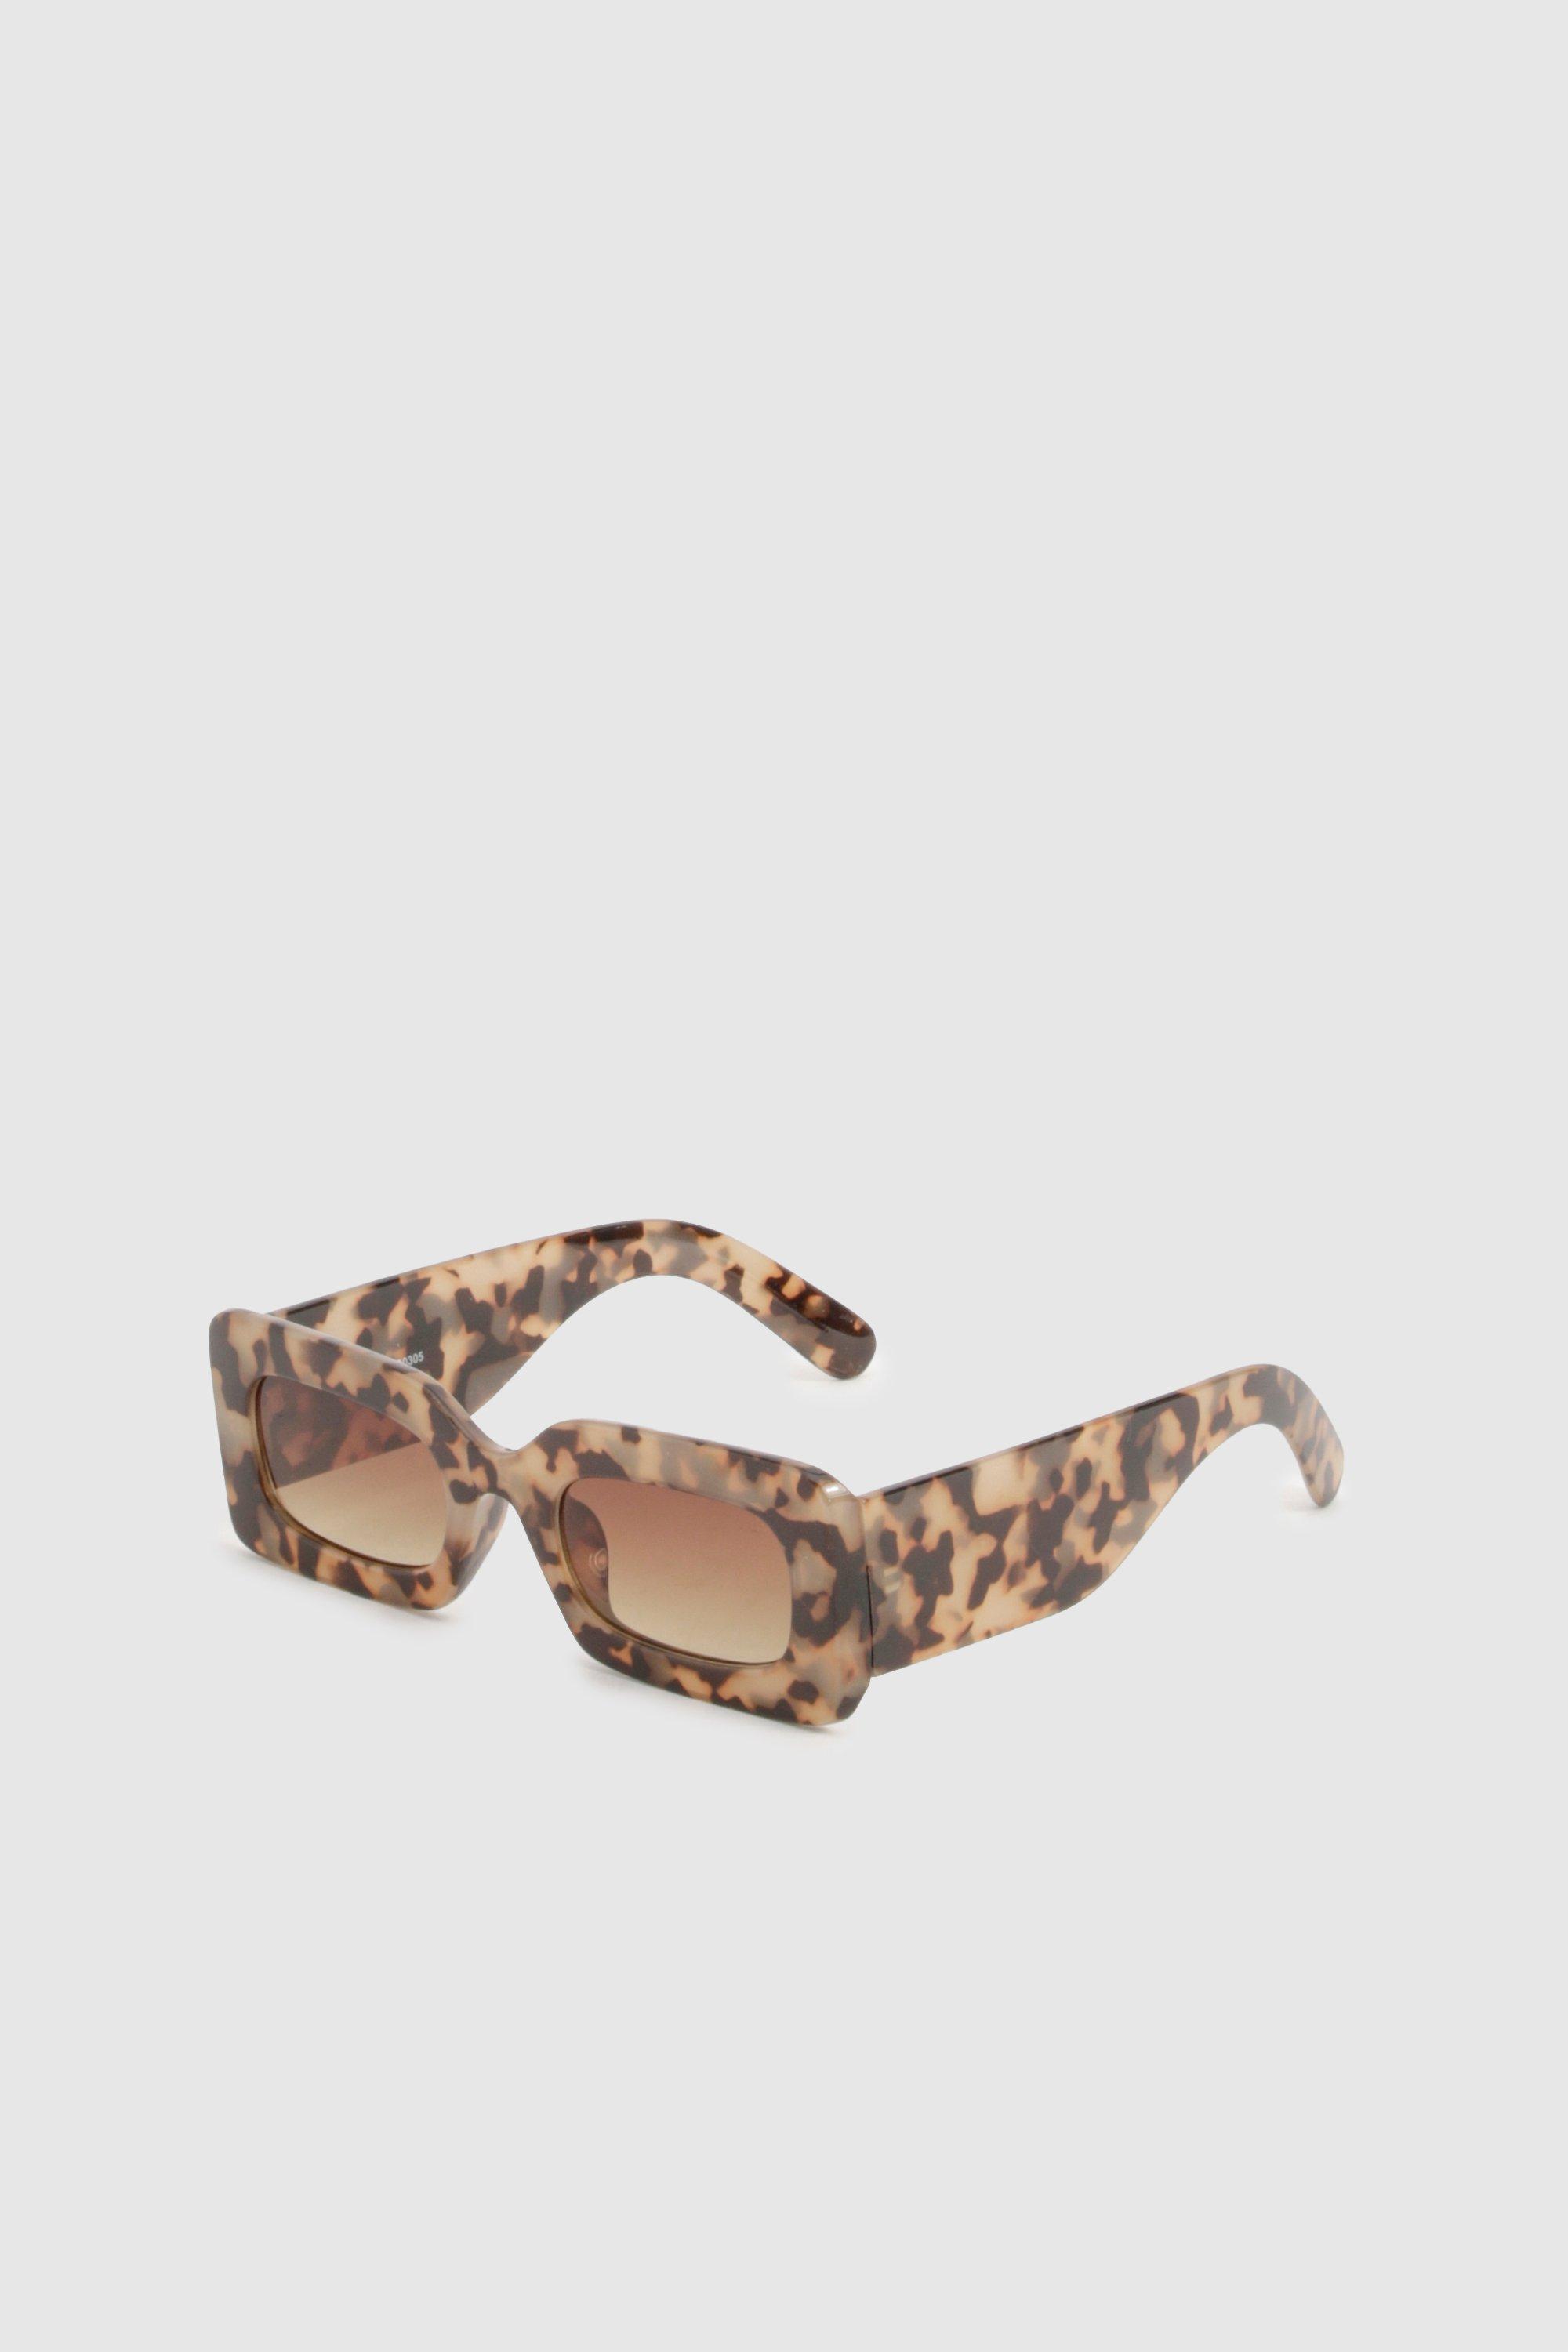 Image of Tortoiseshell Rectangle Thick Frame Sunglasses, Brown